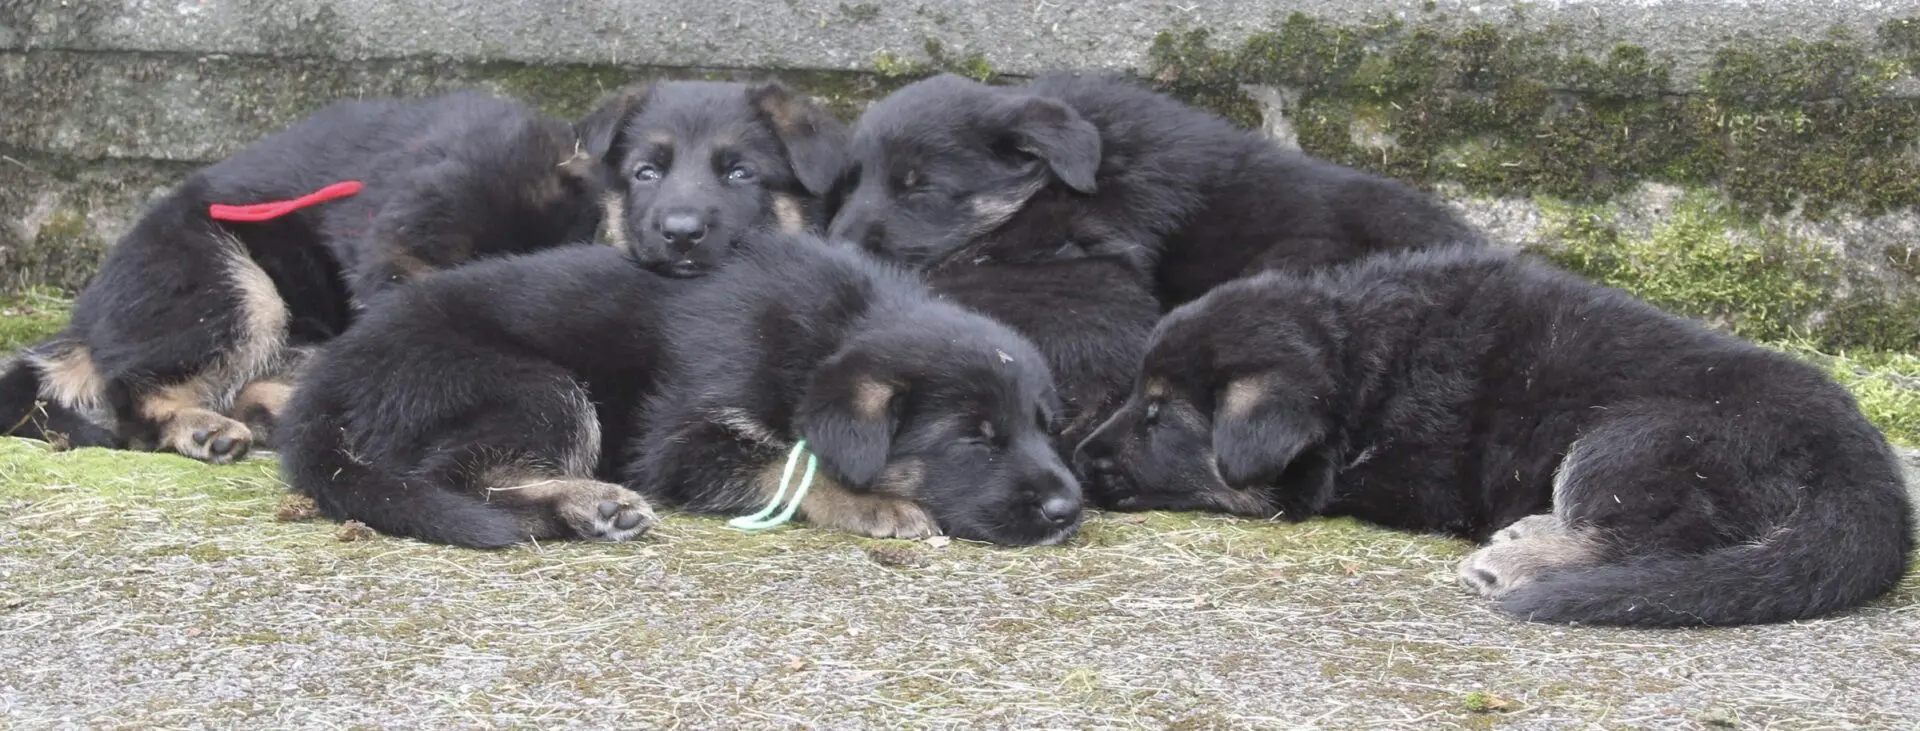 an adorable black puppy pile